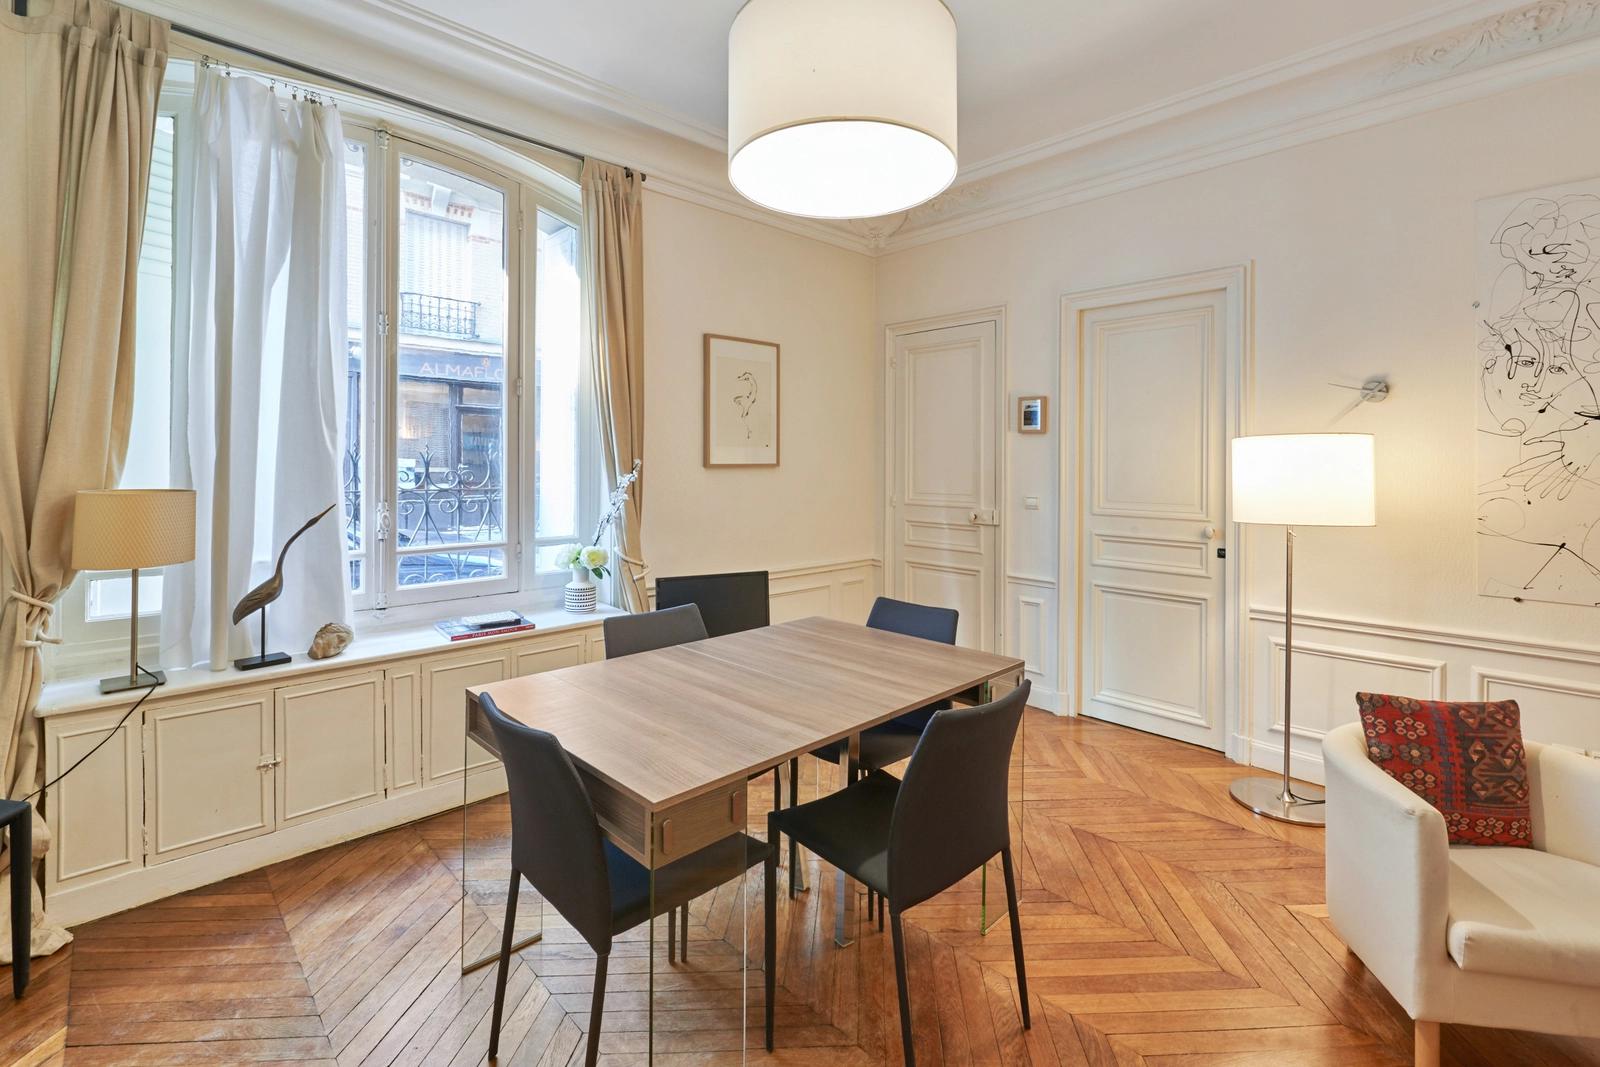 Meeting room in Beautiful Haussmann-style meeting space - 2